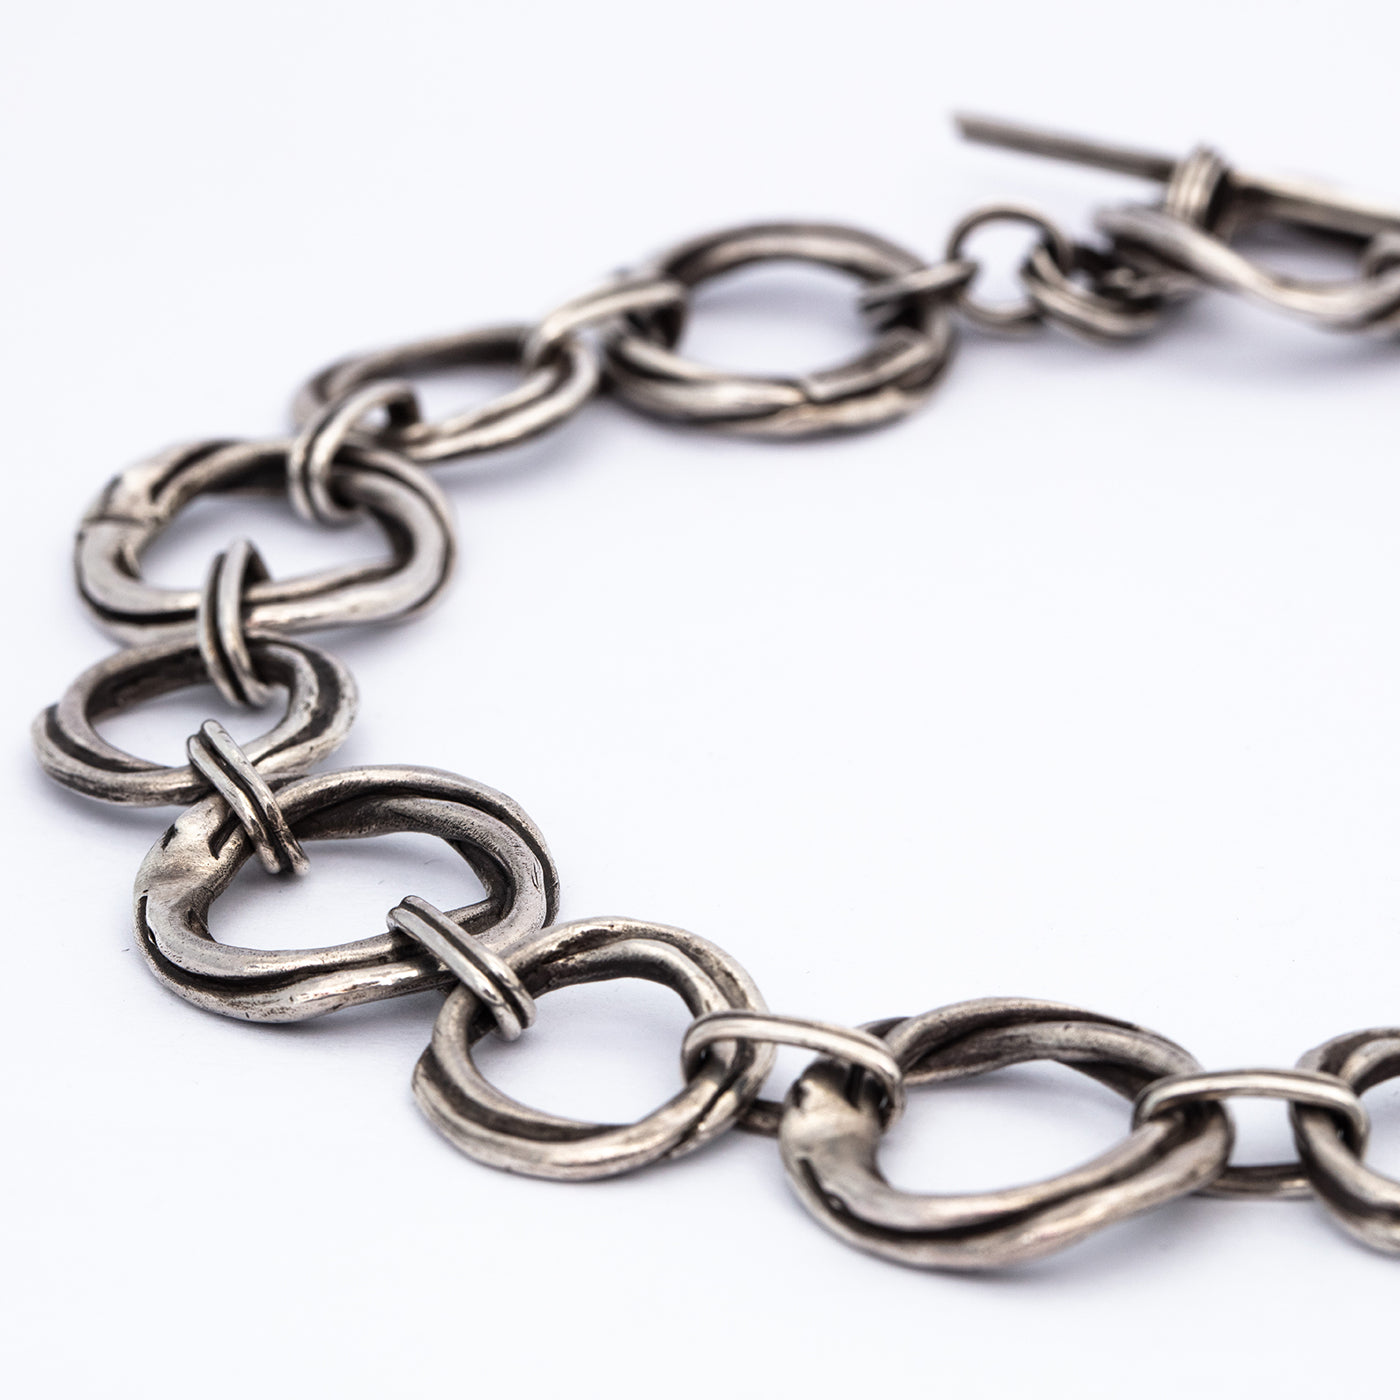 Necklace choker Flow 2 sterling silver product image innan jewellery berlin